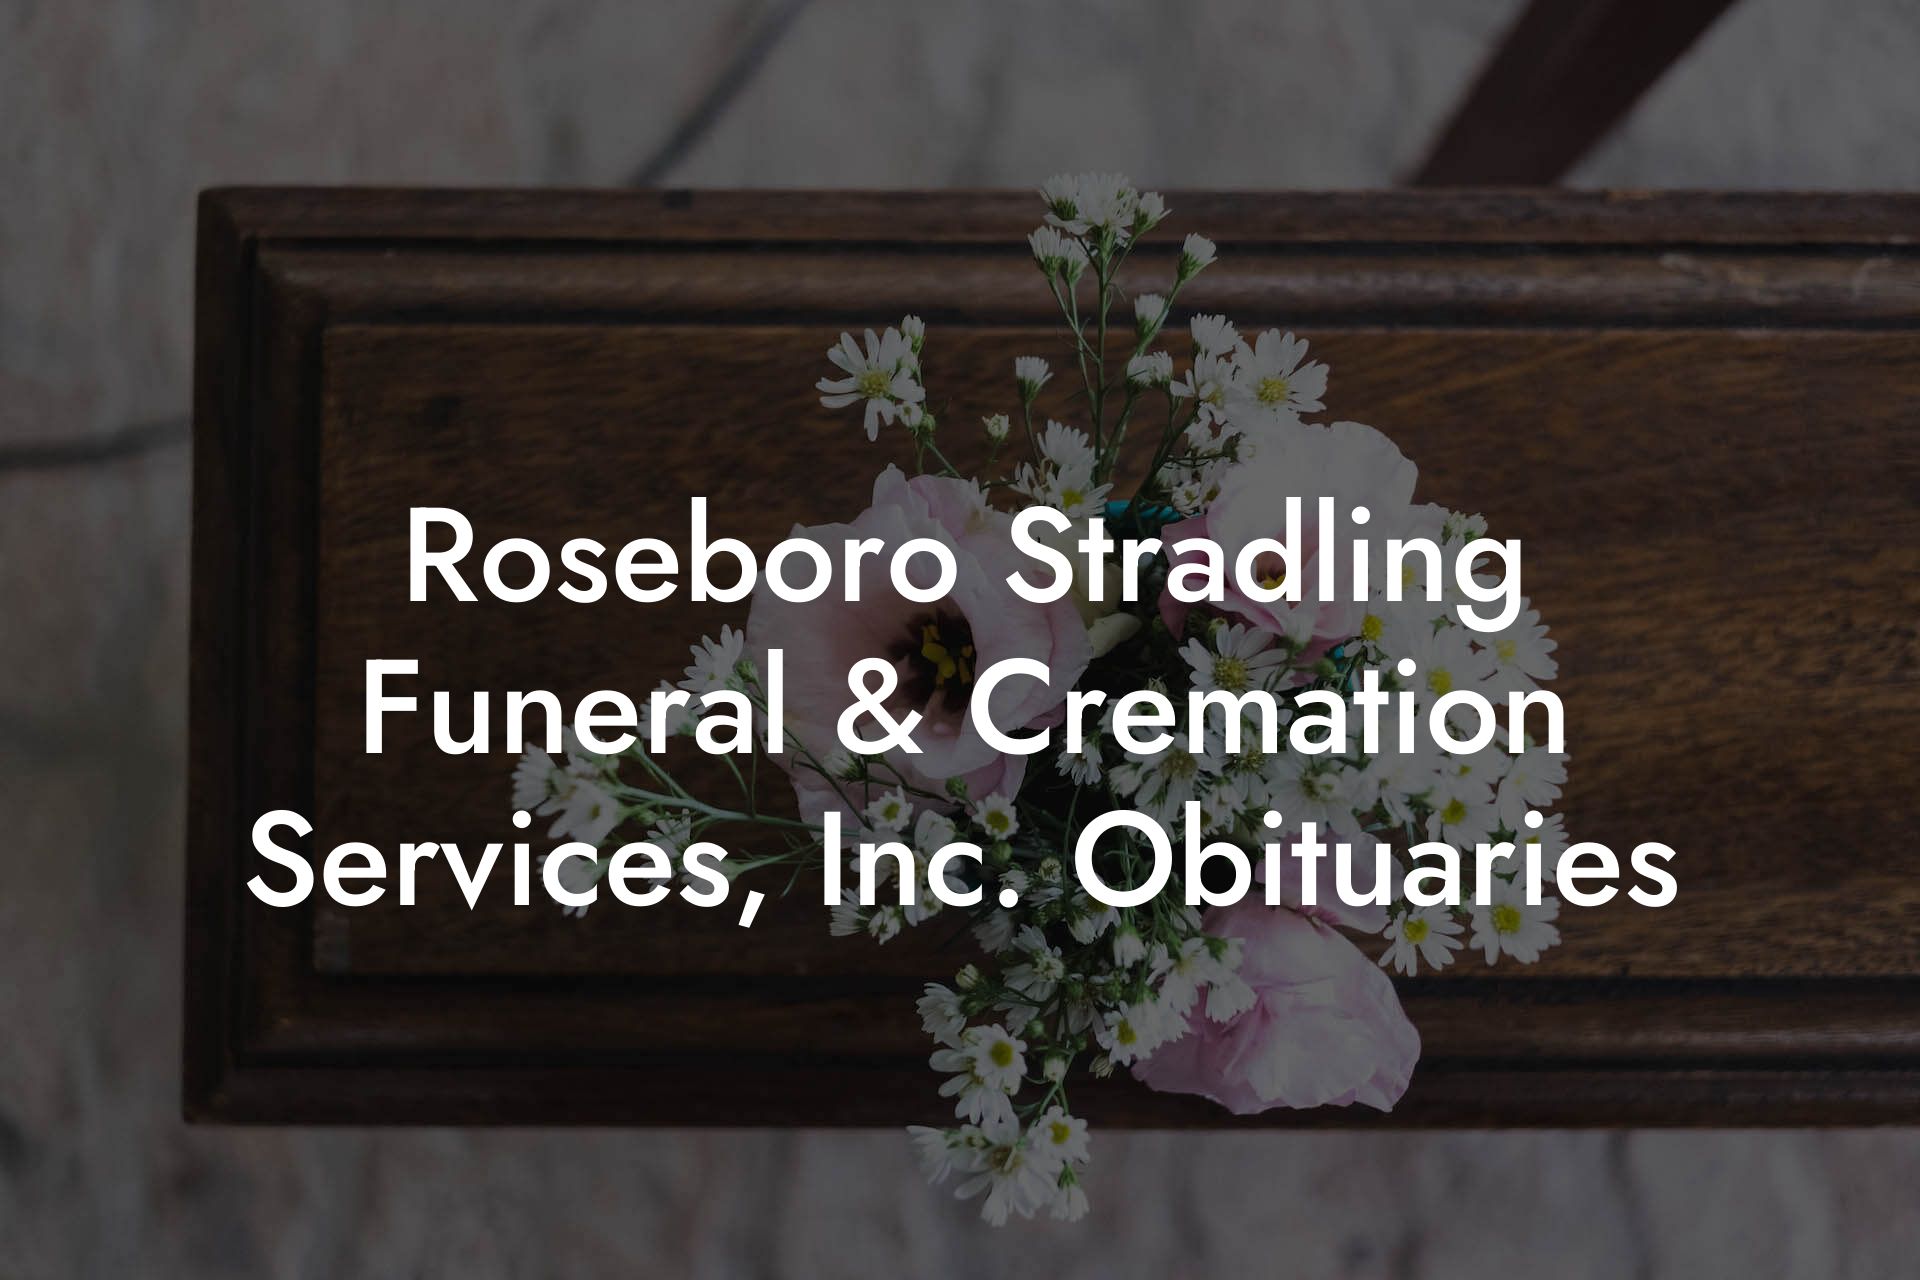 Roseboro Stradling Funeral & Cremation Services, Inc. Obituaries